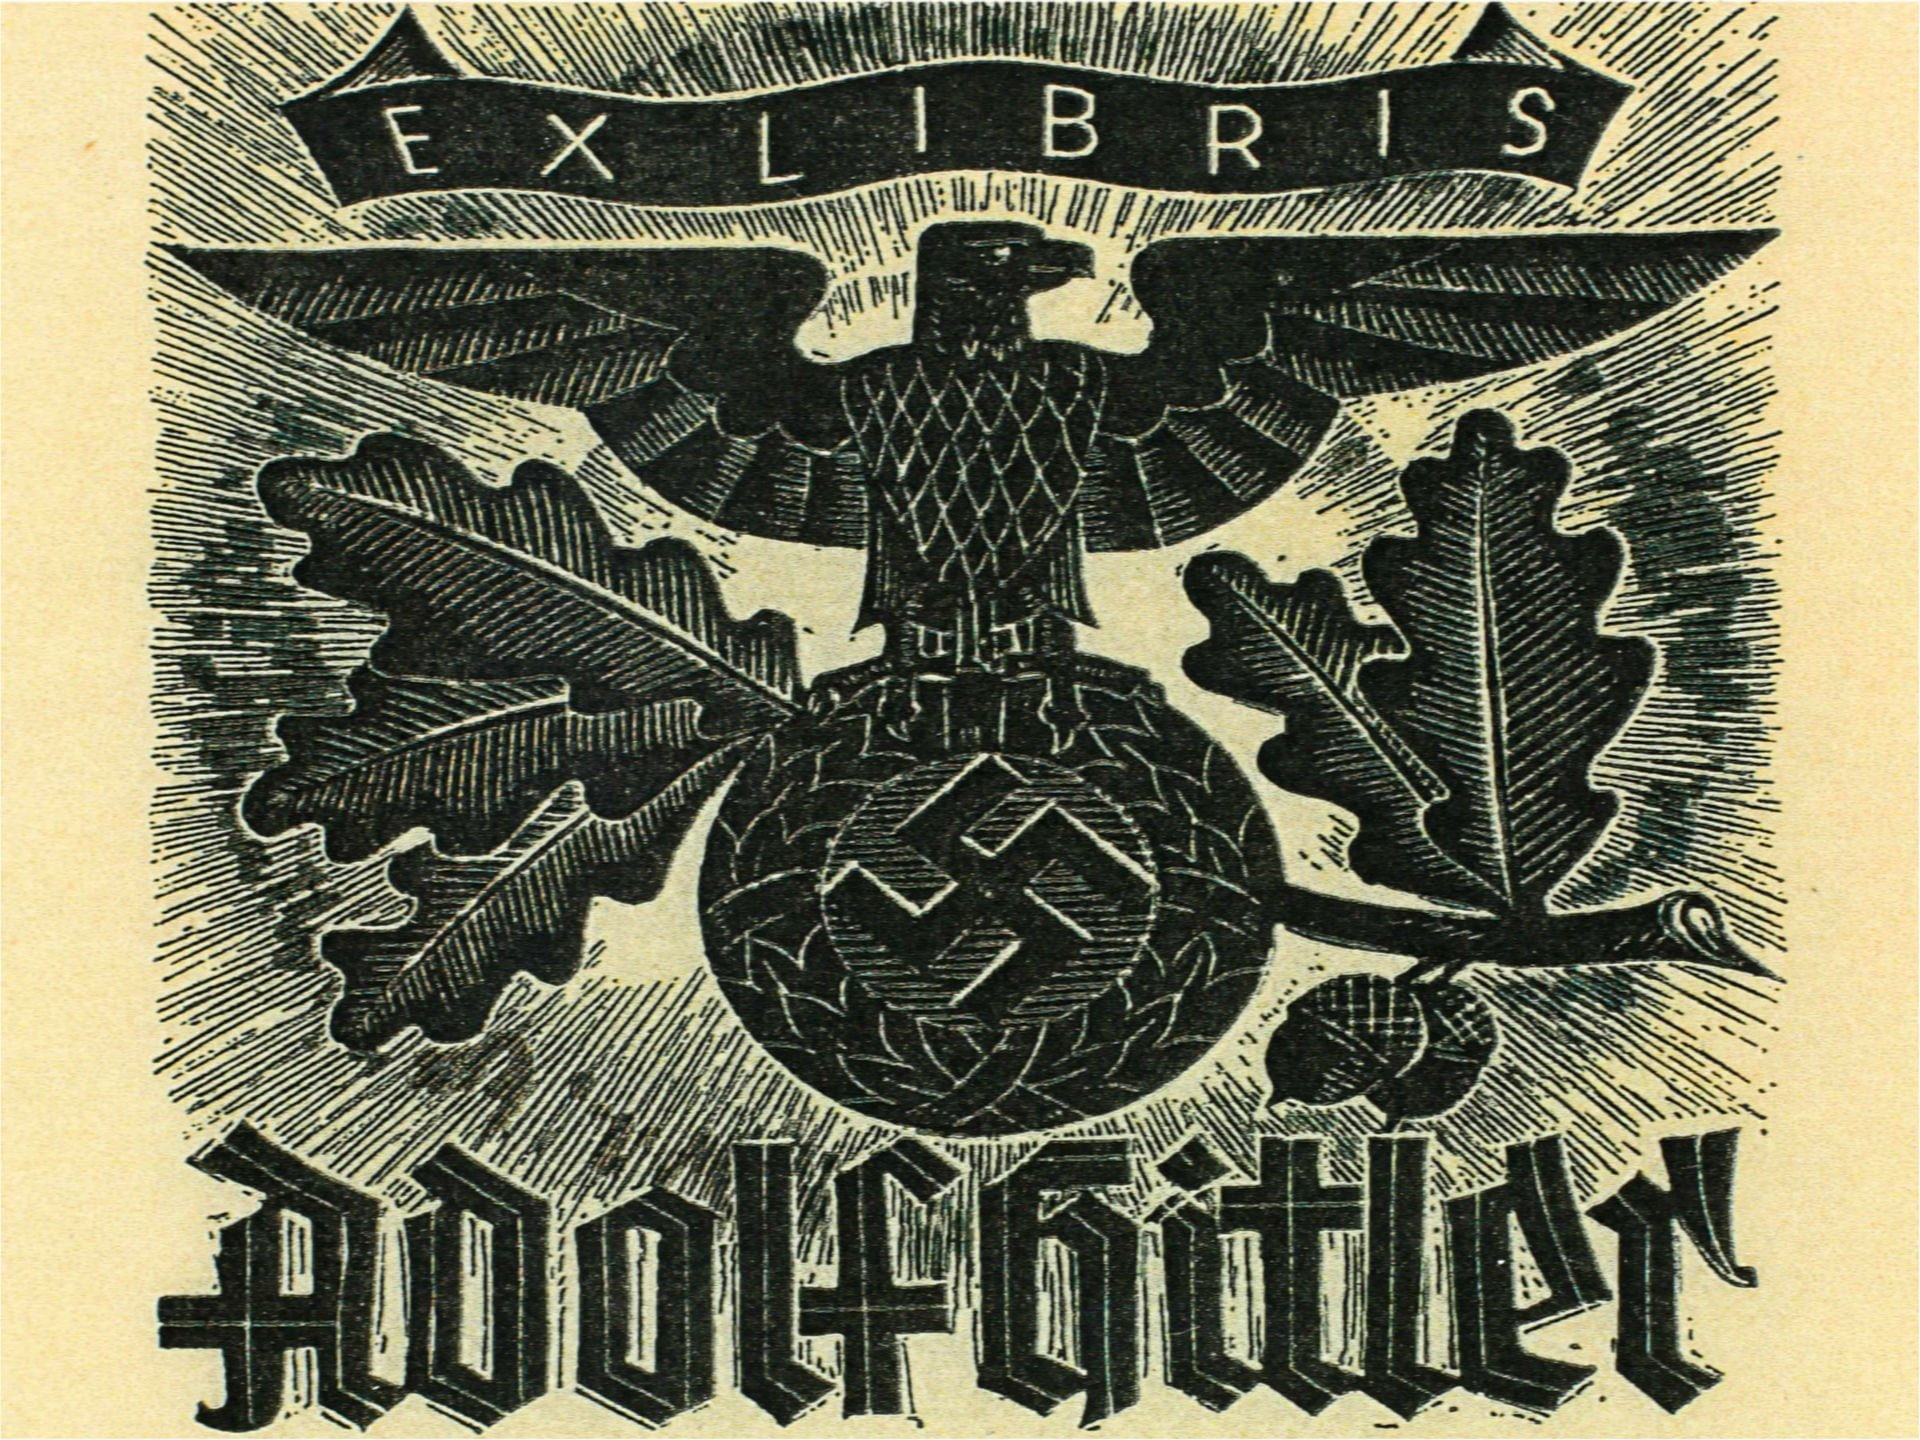 adolf, anarchy, Dark, Evil, history, Hitler, military, Nazi